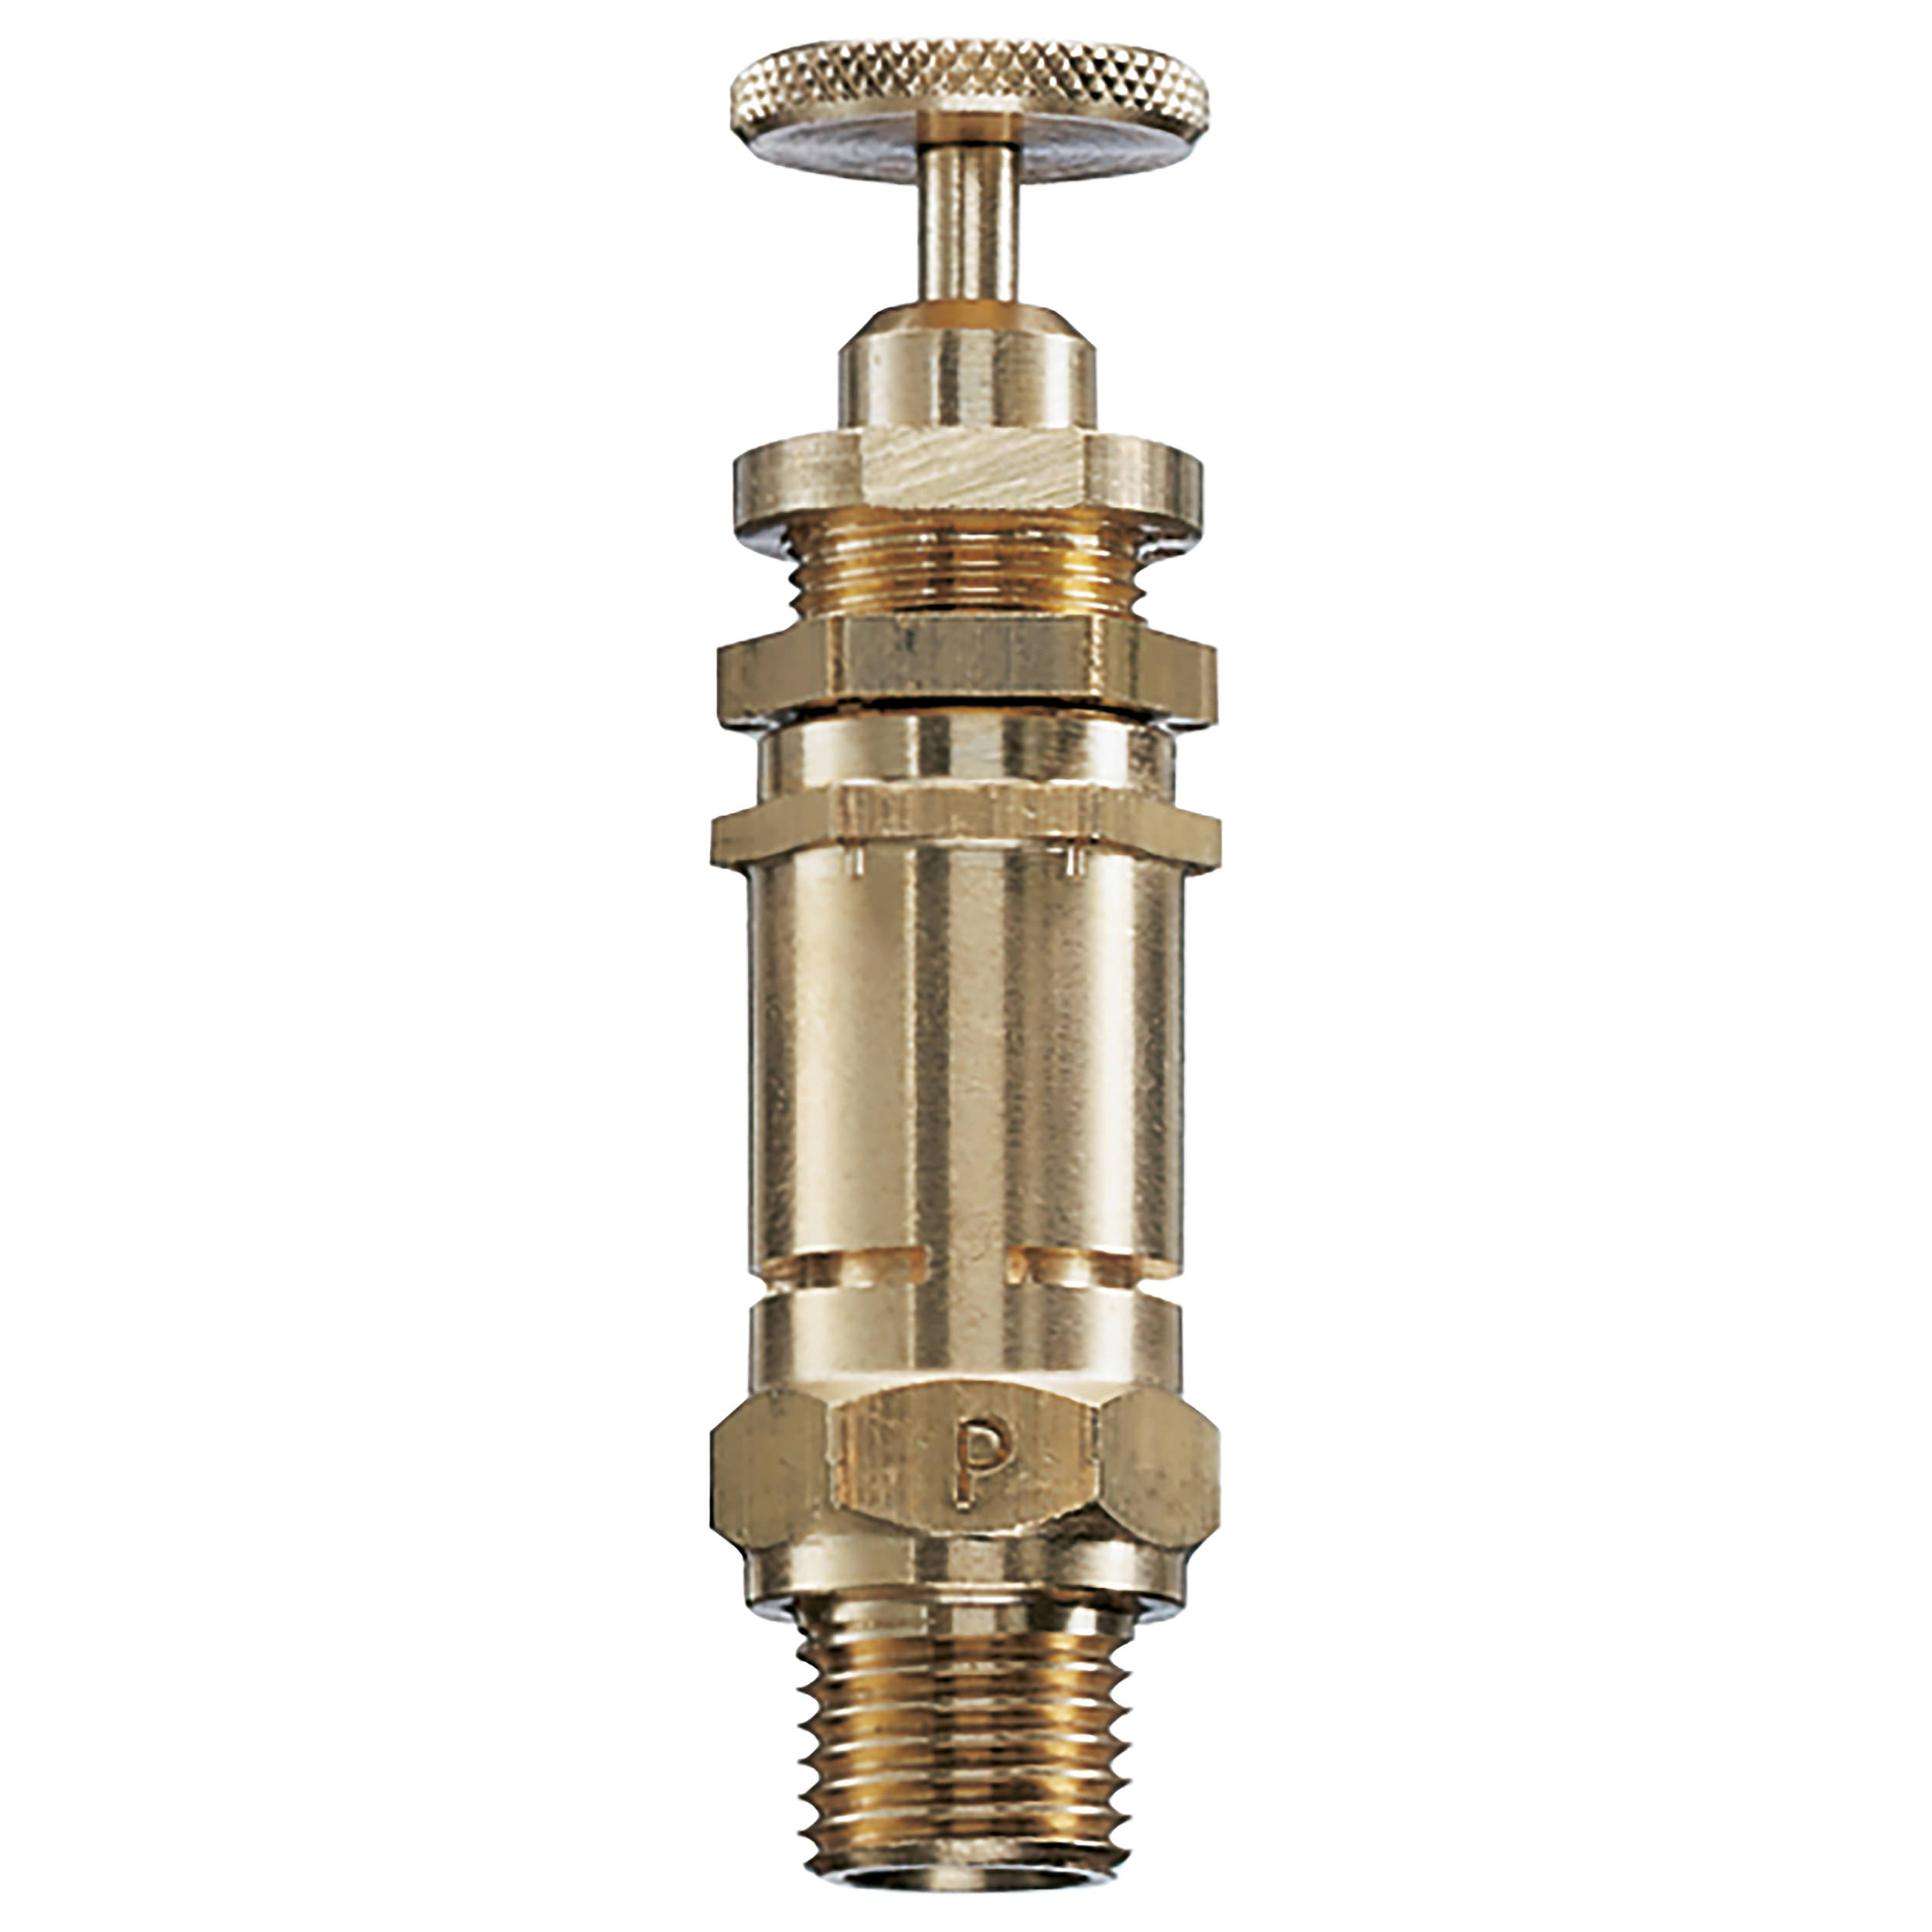 Classic blow-off valve DN 6, G¼, metall, pressure: 4.1-8 bar